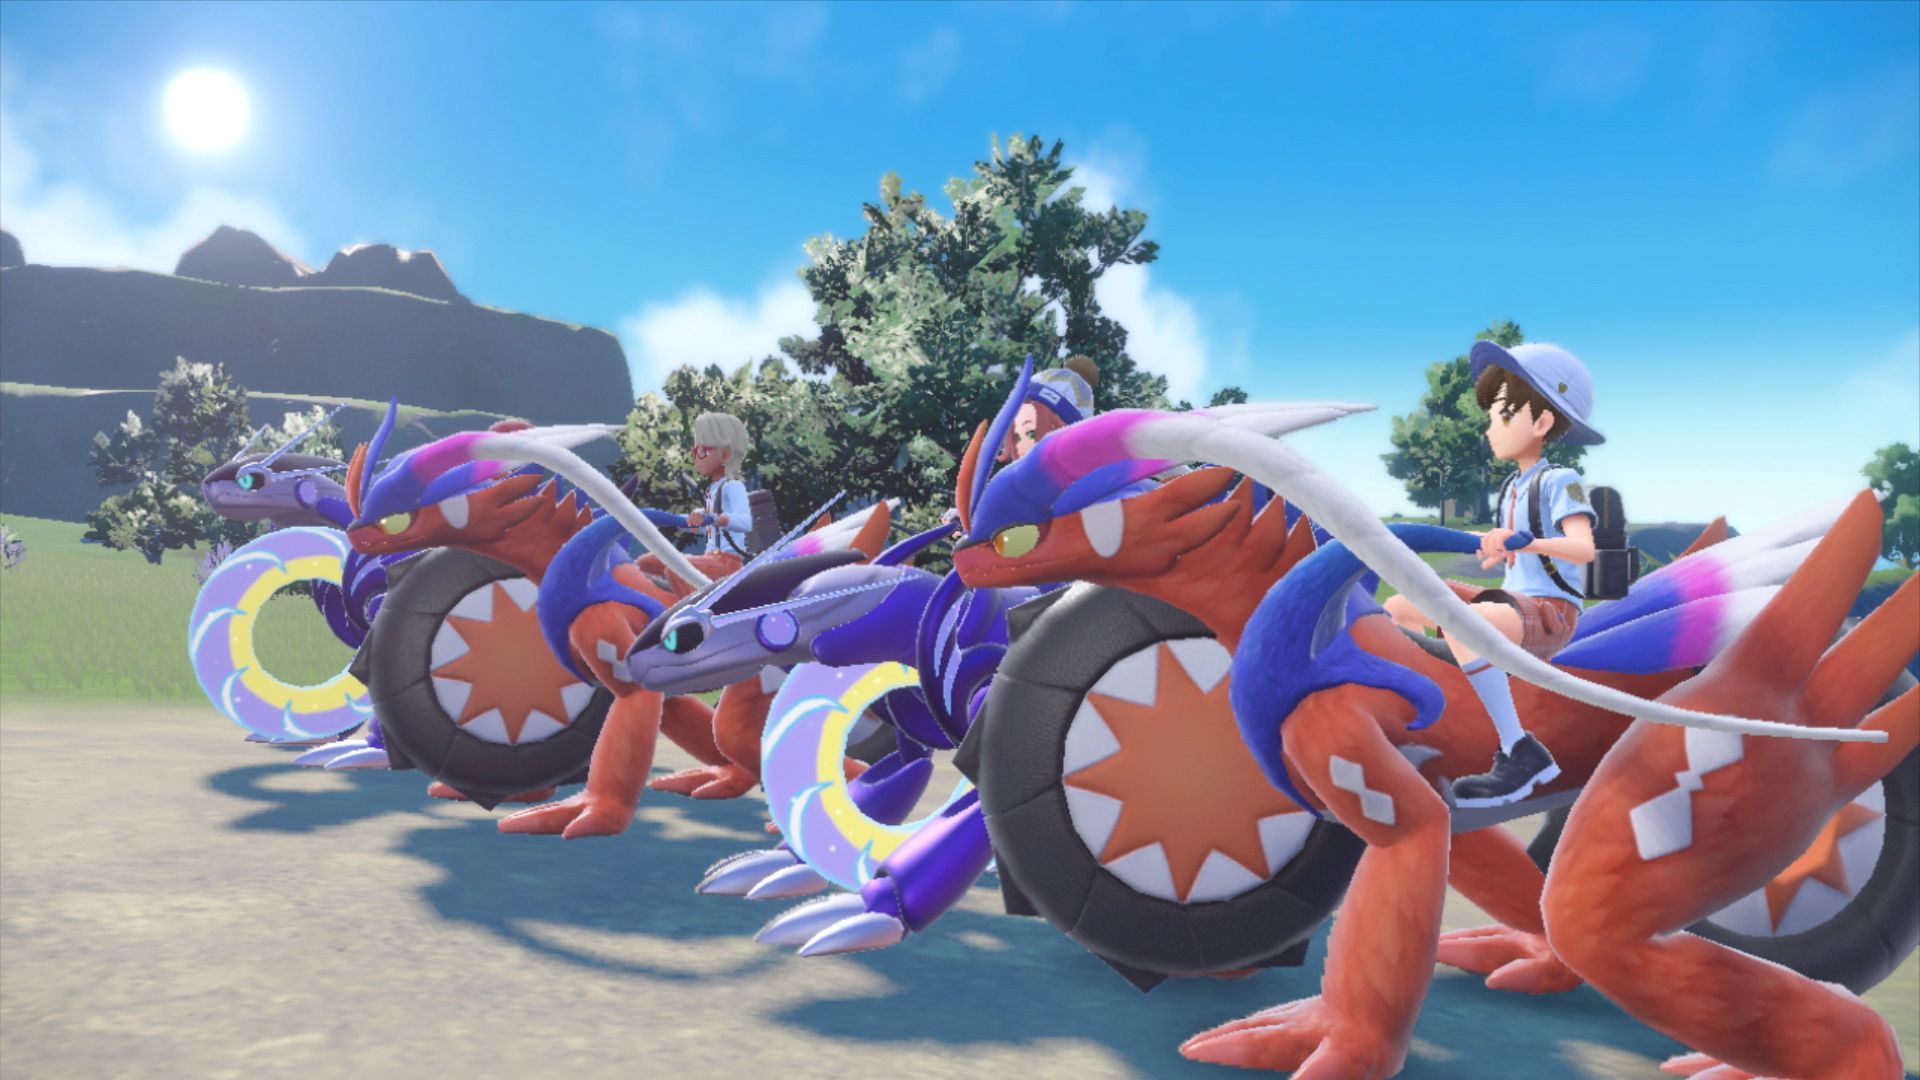 New details revealed for Pokémon Scarlet and Pokémon Violet, including Tera  Raid Battles - News - Nintendo Official Site